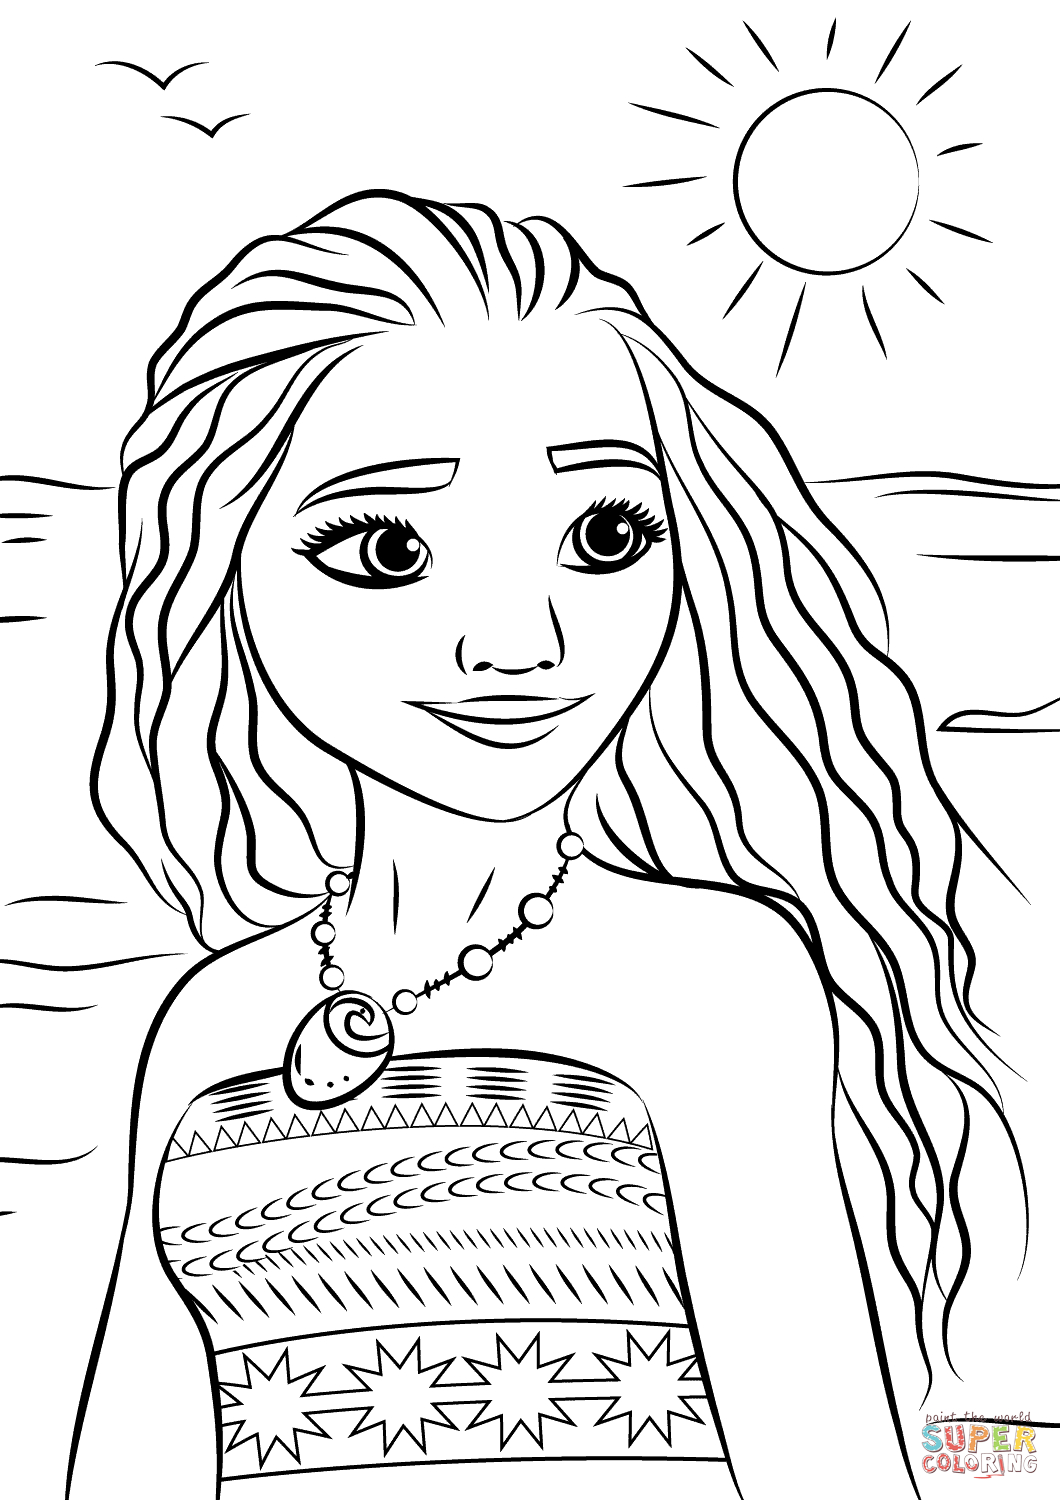 Princess Moana Portrait Coloring Page | Free Printable Coloring - Moana Coloring Pages Free Printable